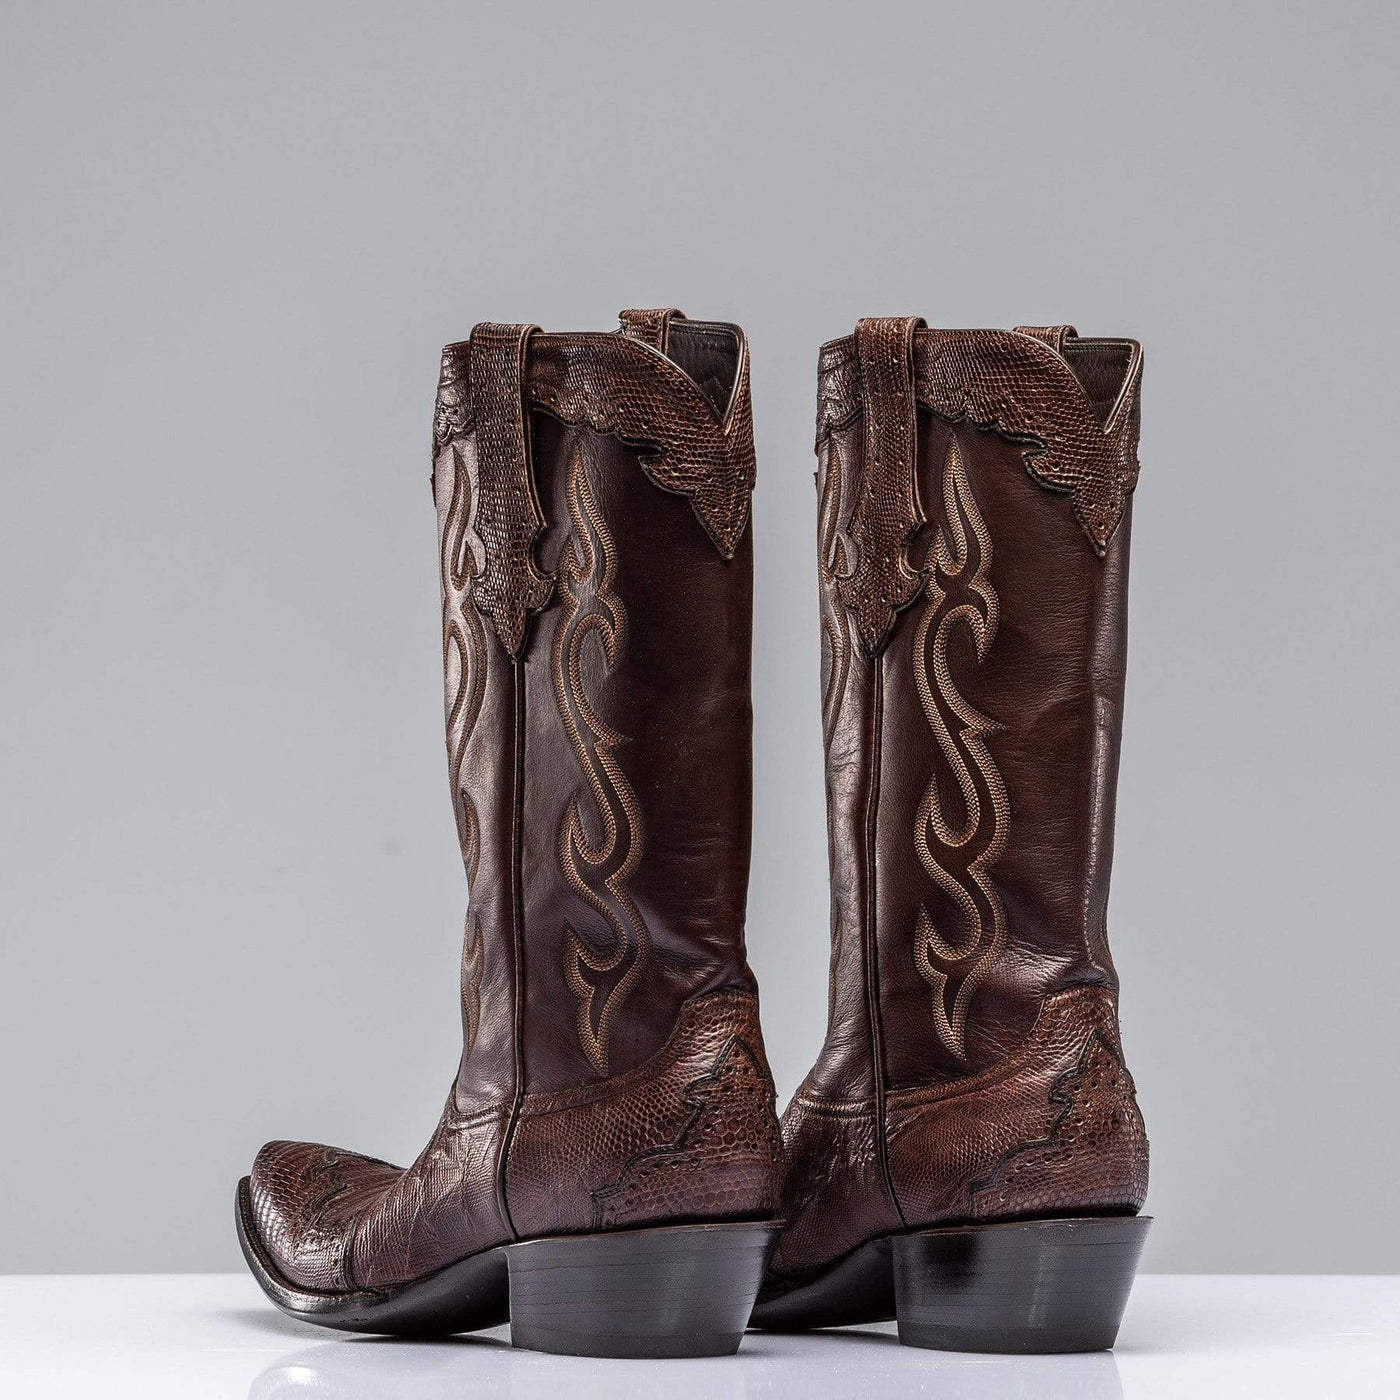 Teju Lizard Cowboy Boots - AXEL'S